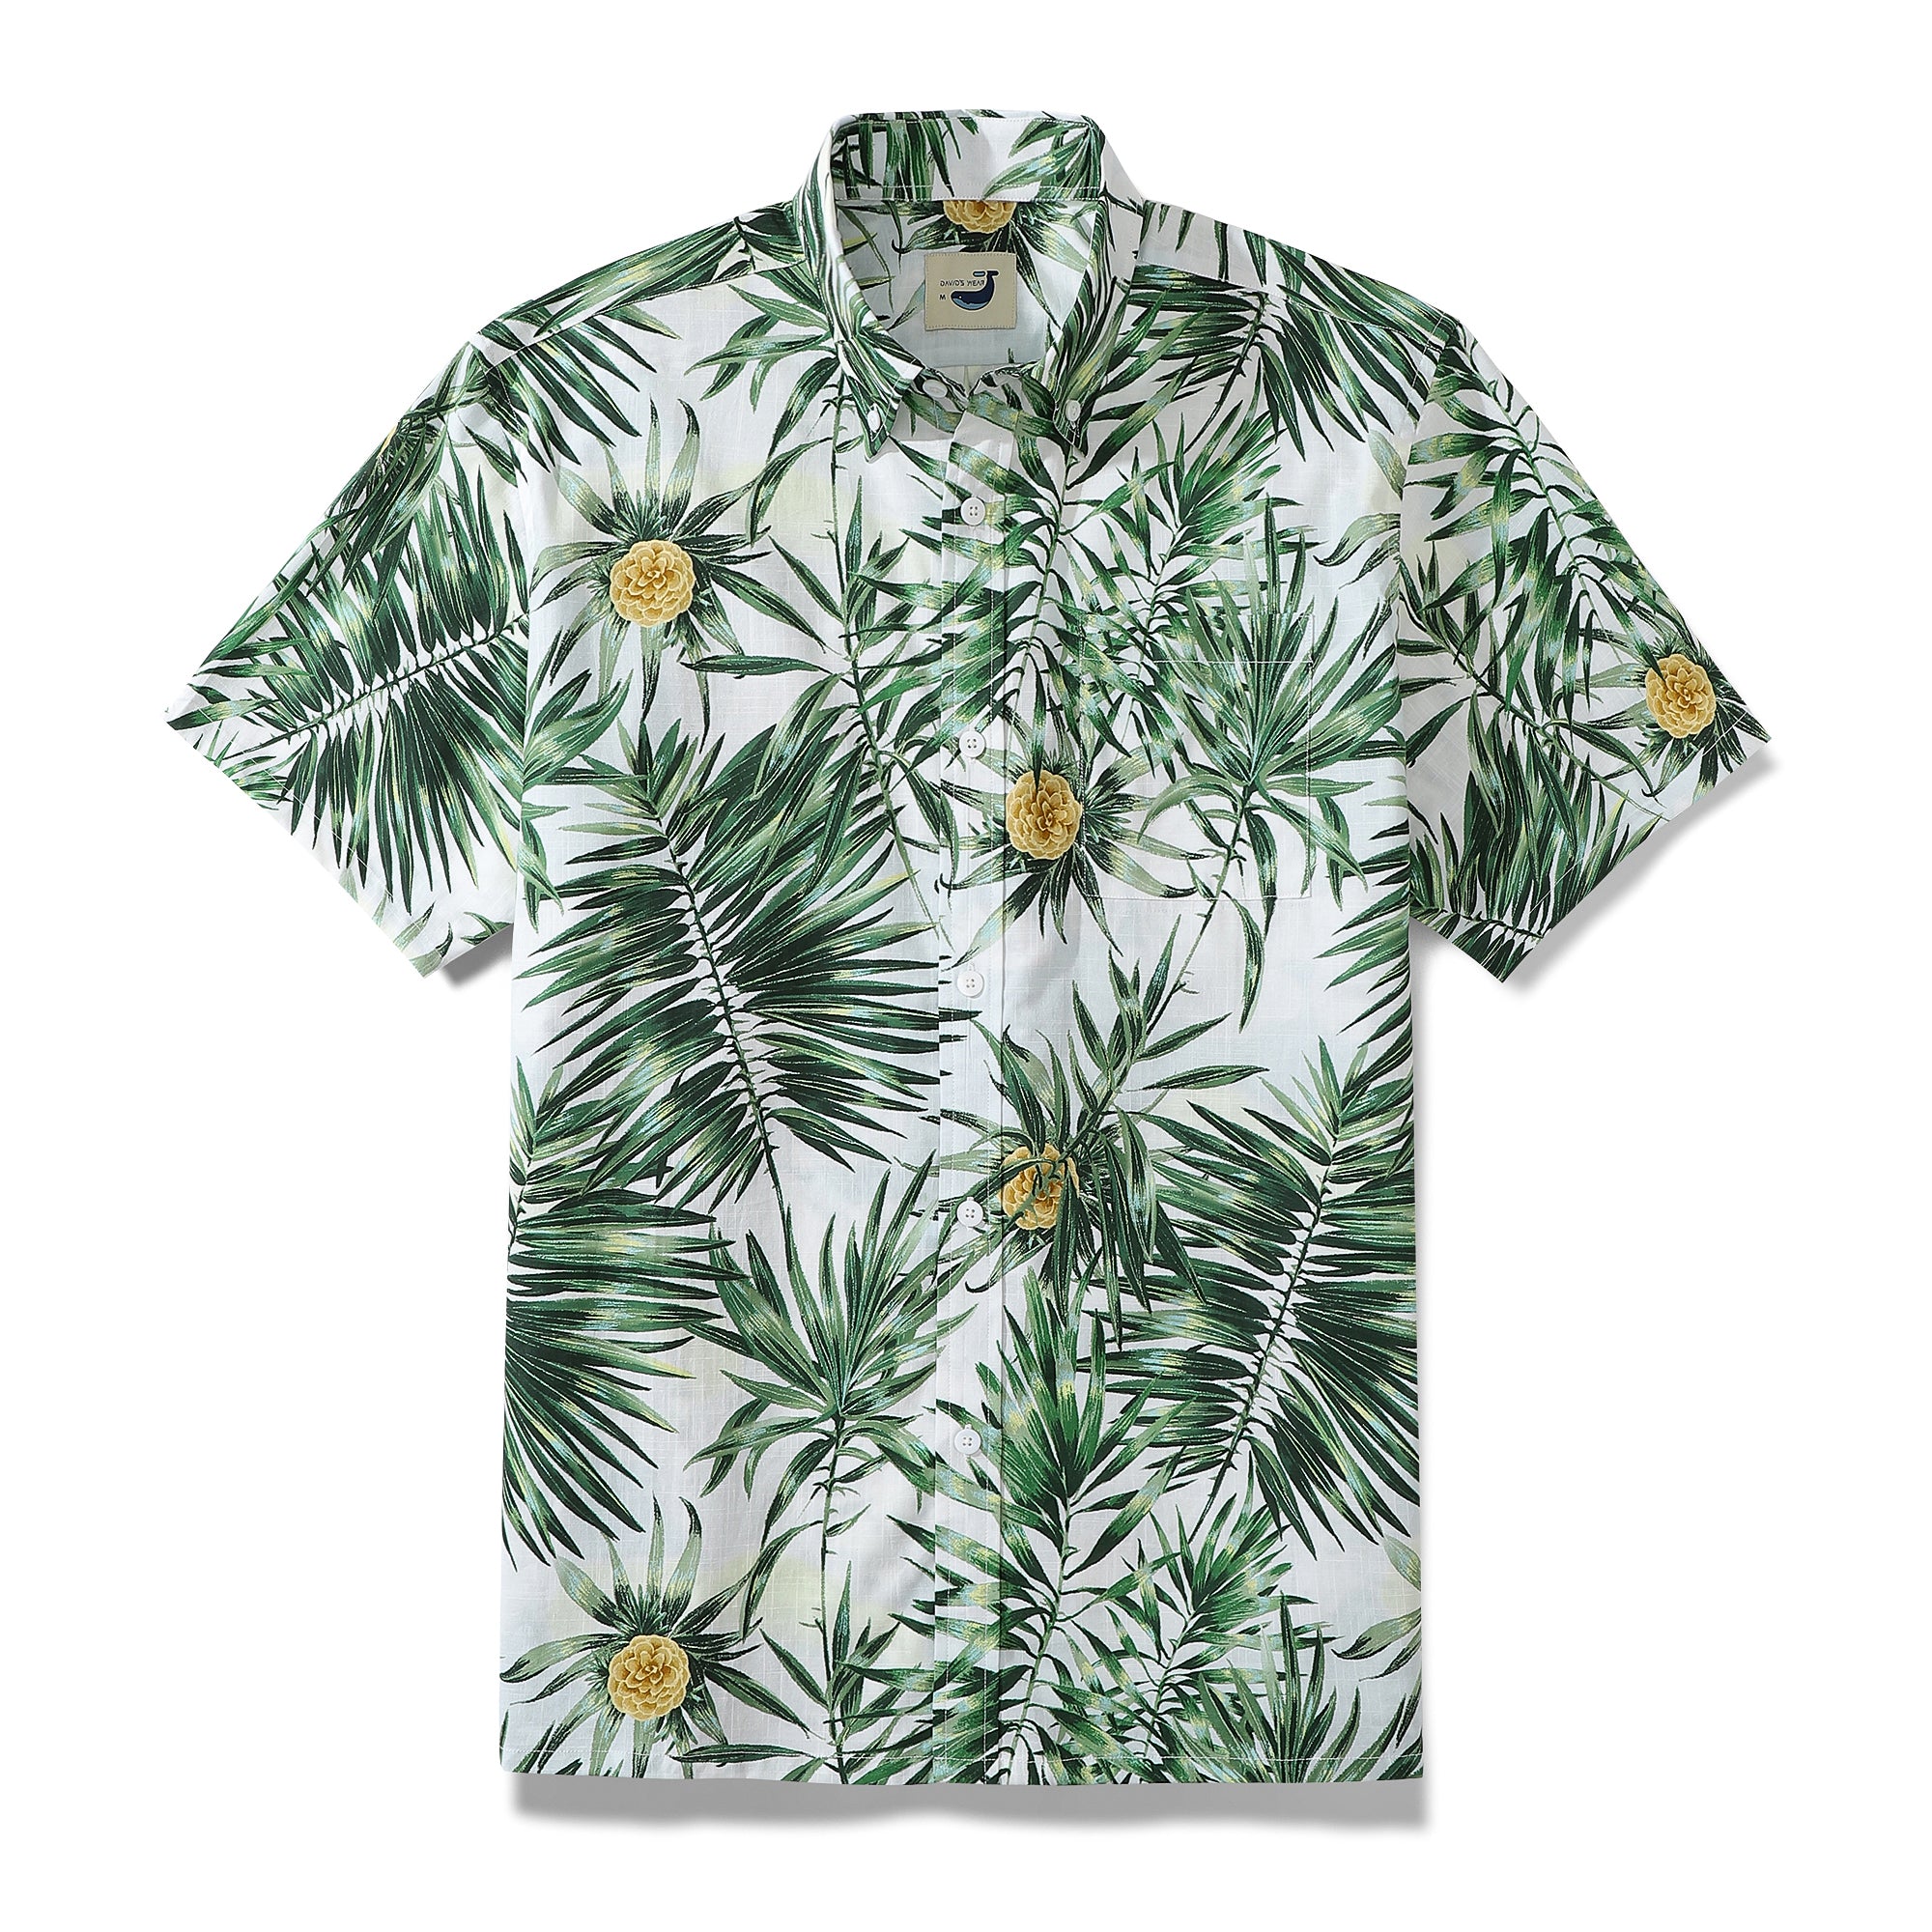 Men's Hawaiian Shirt Green Tropical Leaves 1930s Vintage Aloha Shirt